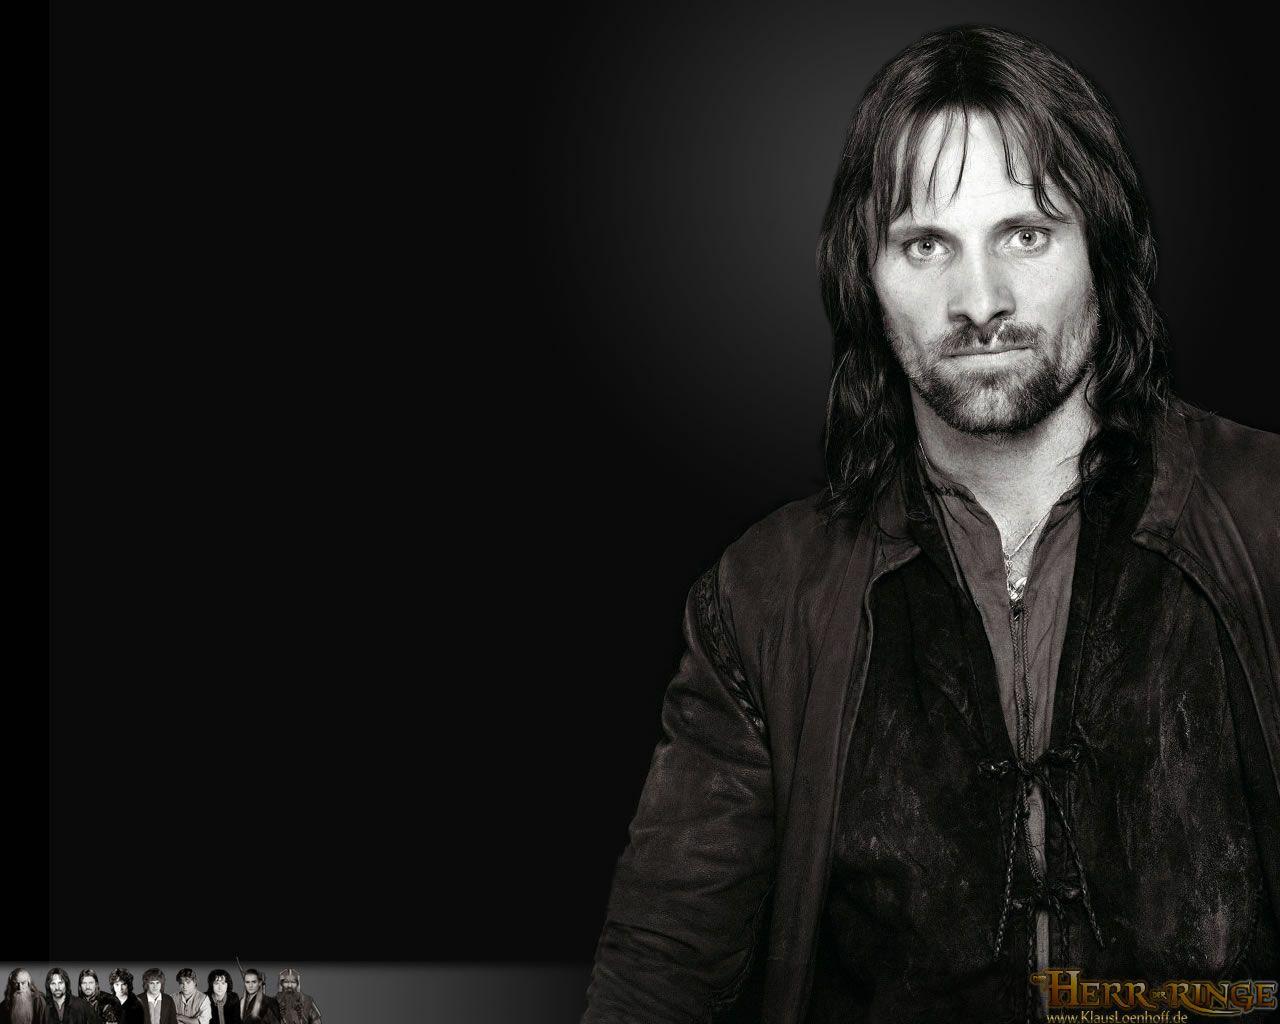 Aragorn Wallpaper